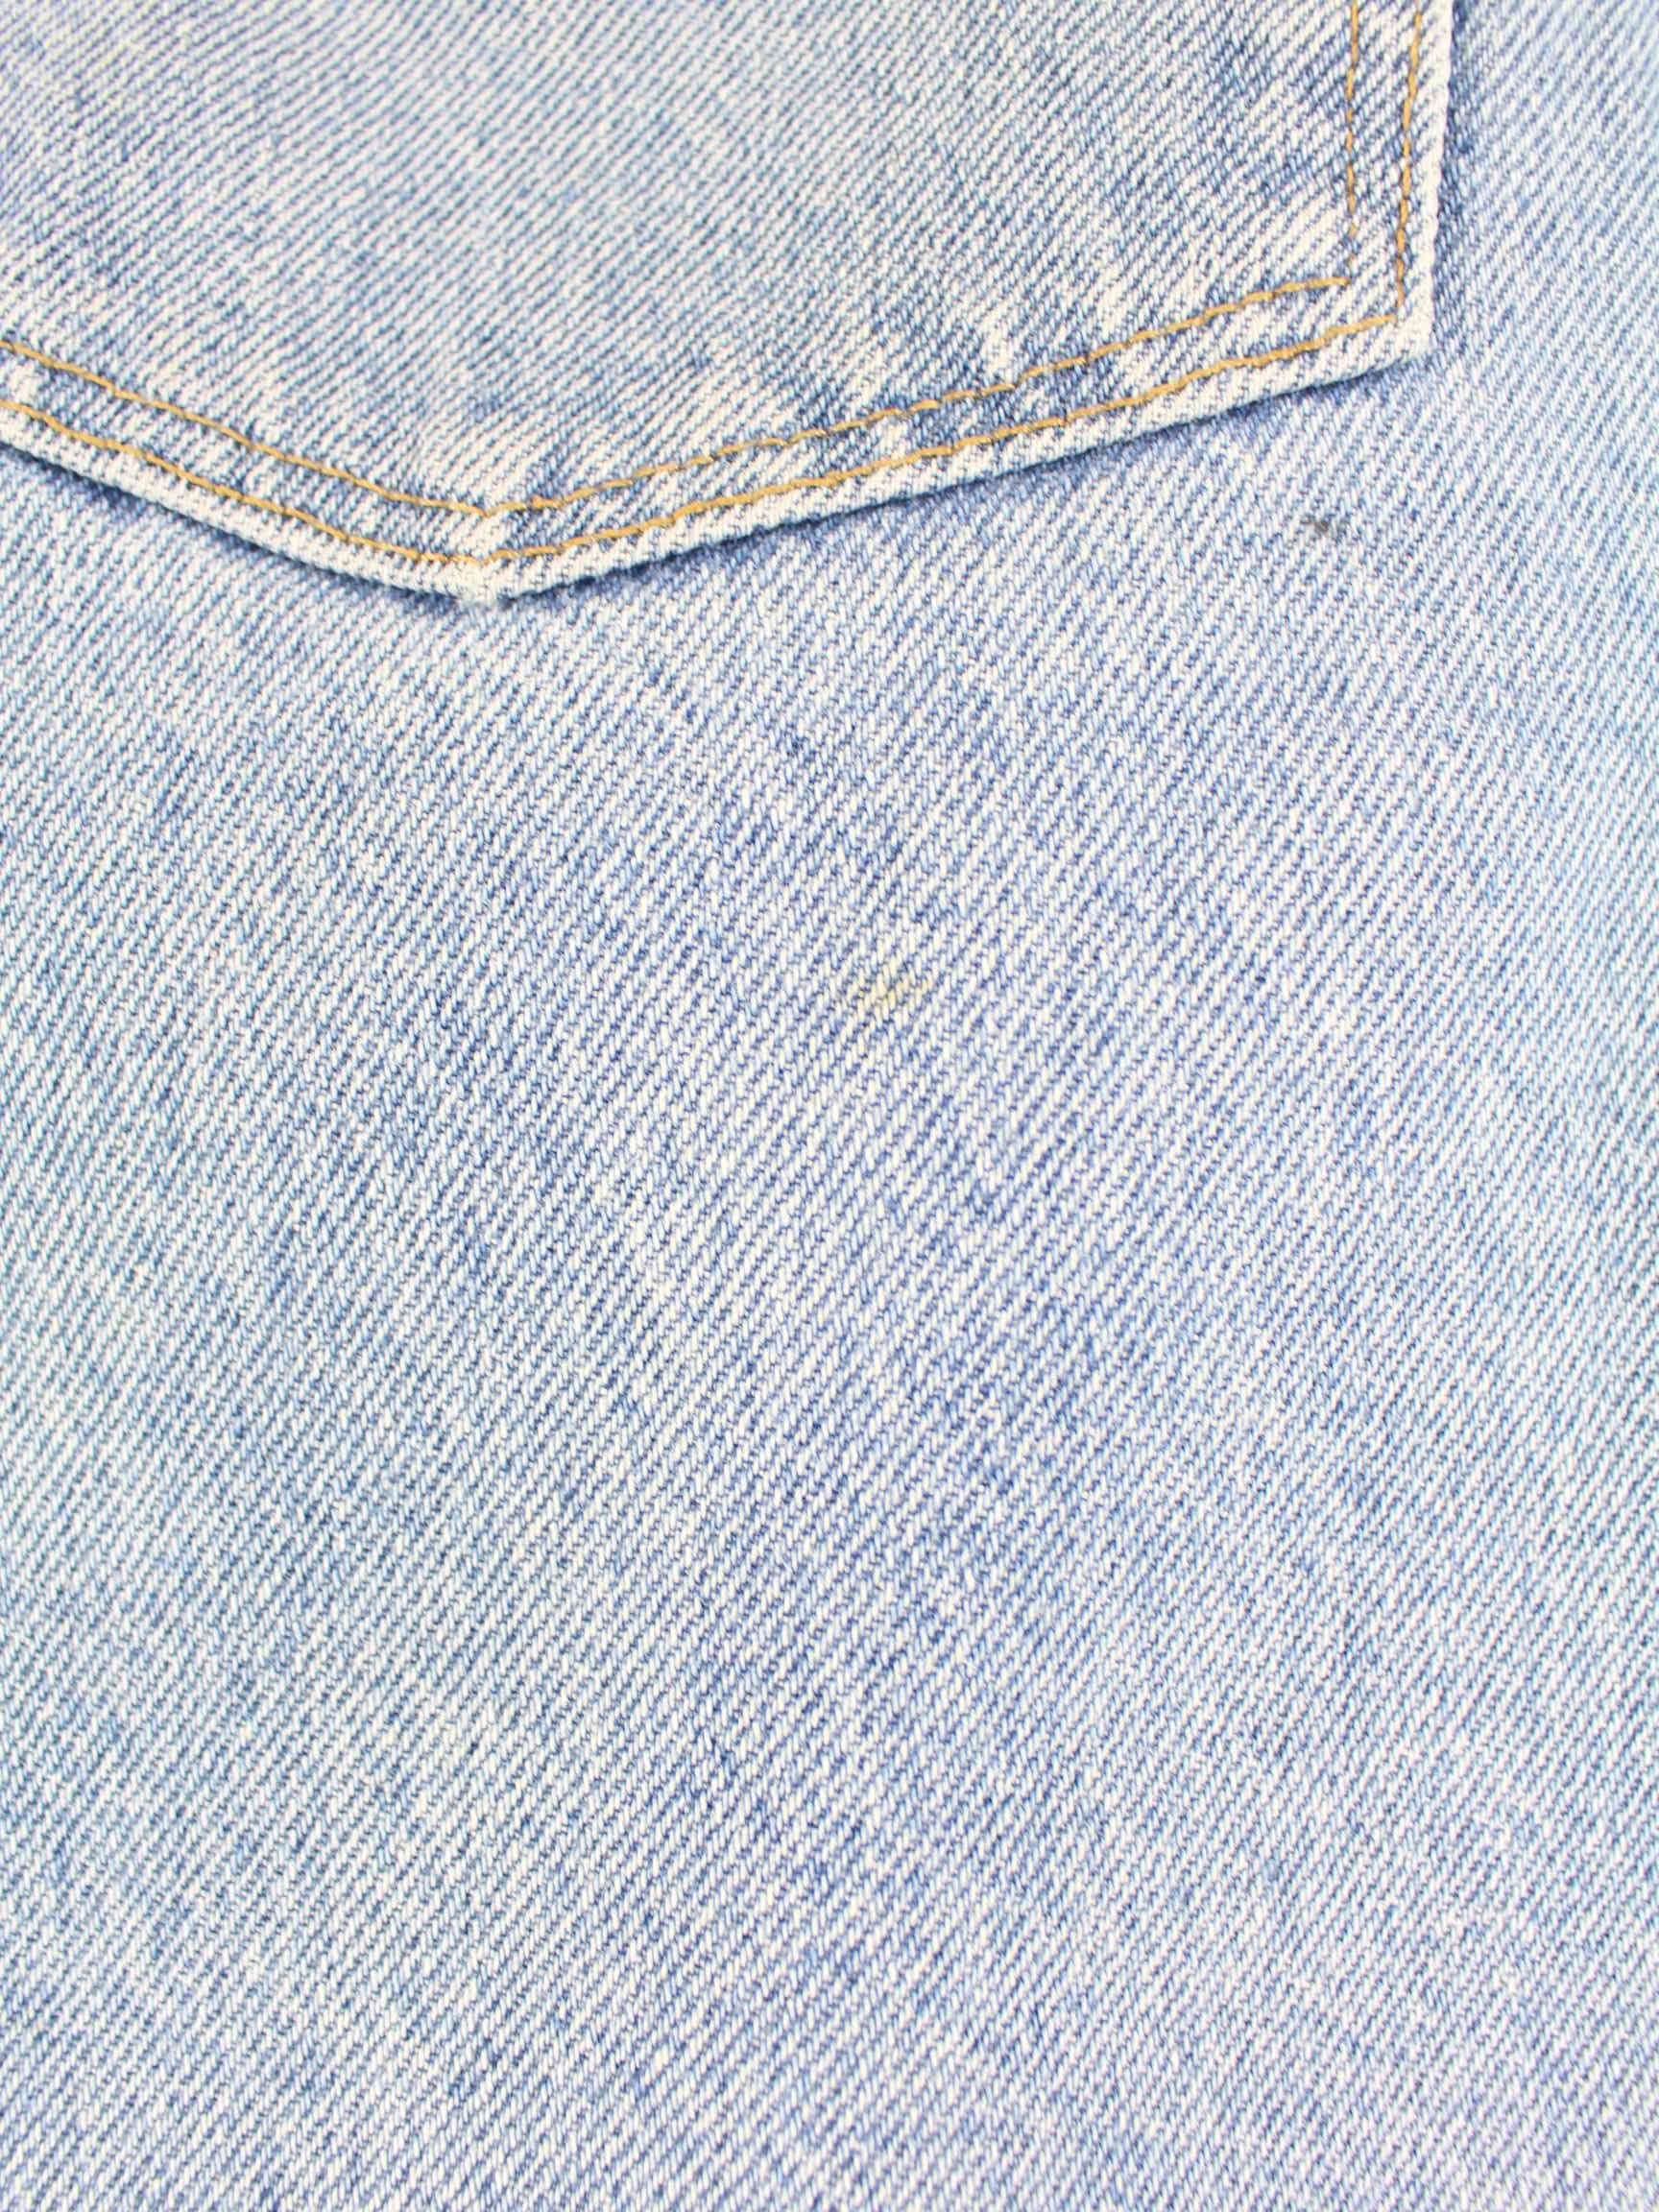 Wrangler Jeans Shorts Blau W46 (detail image 2)